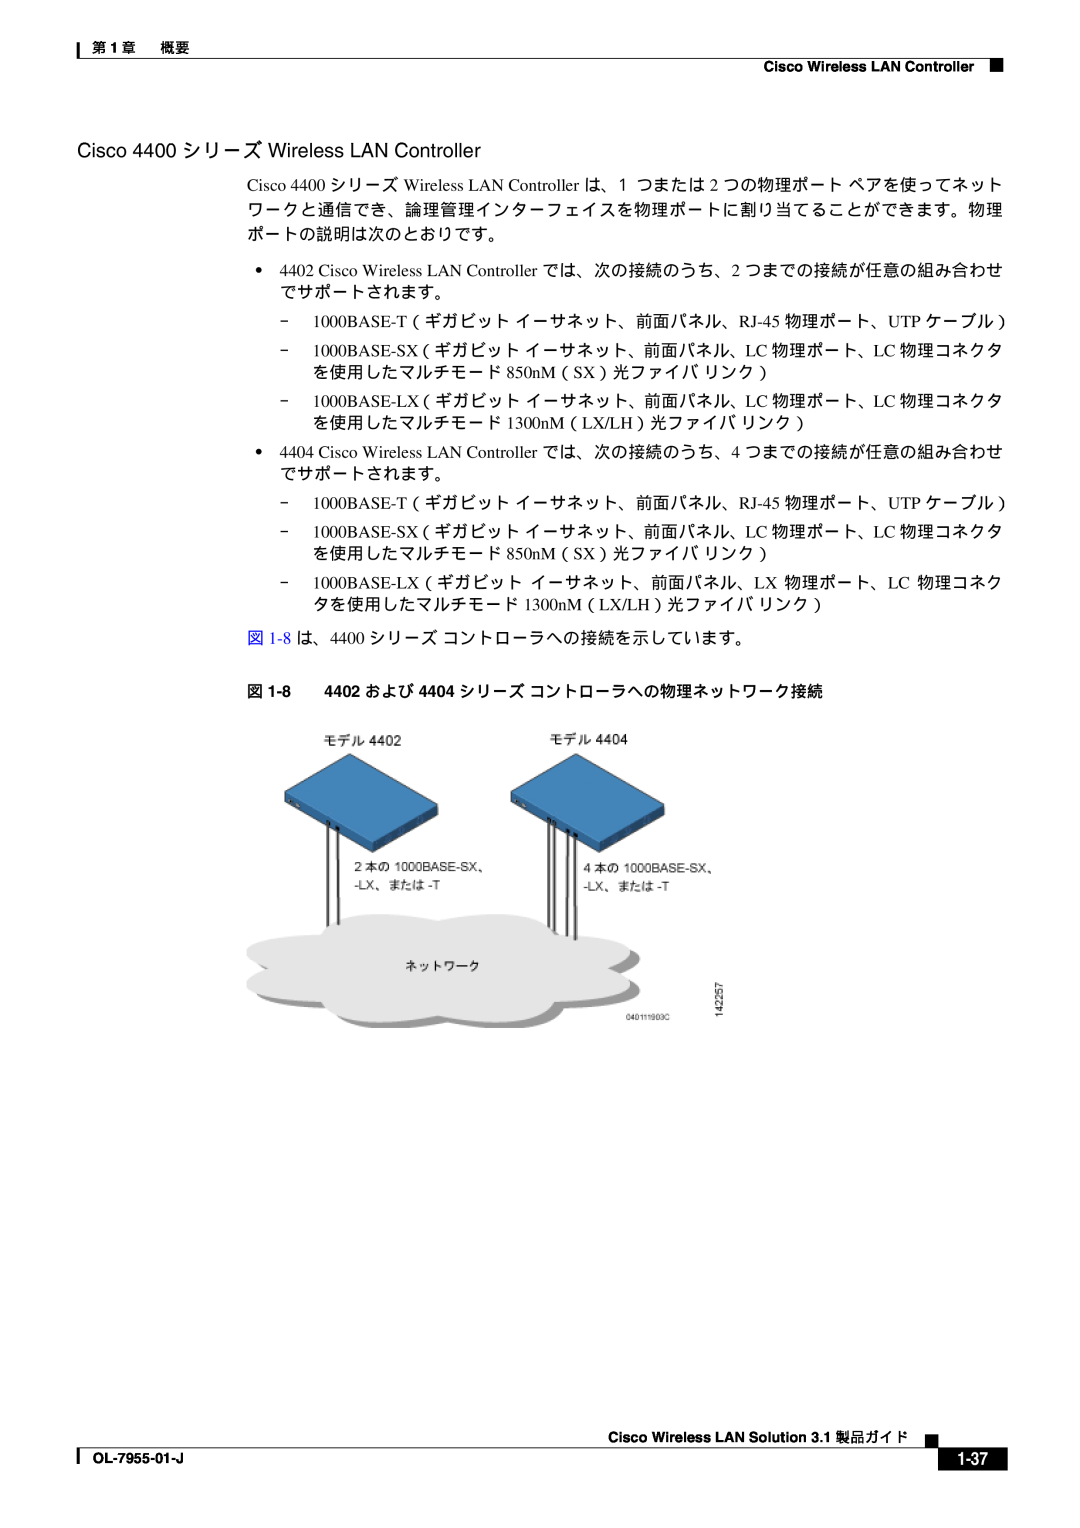 Cisco Systems 3.1 manual Cisco 4400 シリーズ Wireless LAN Controller, 1-37 